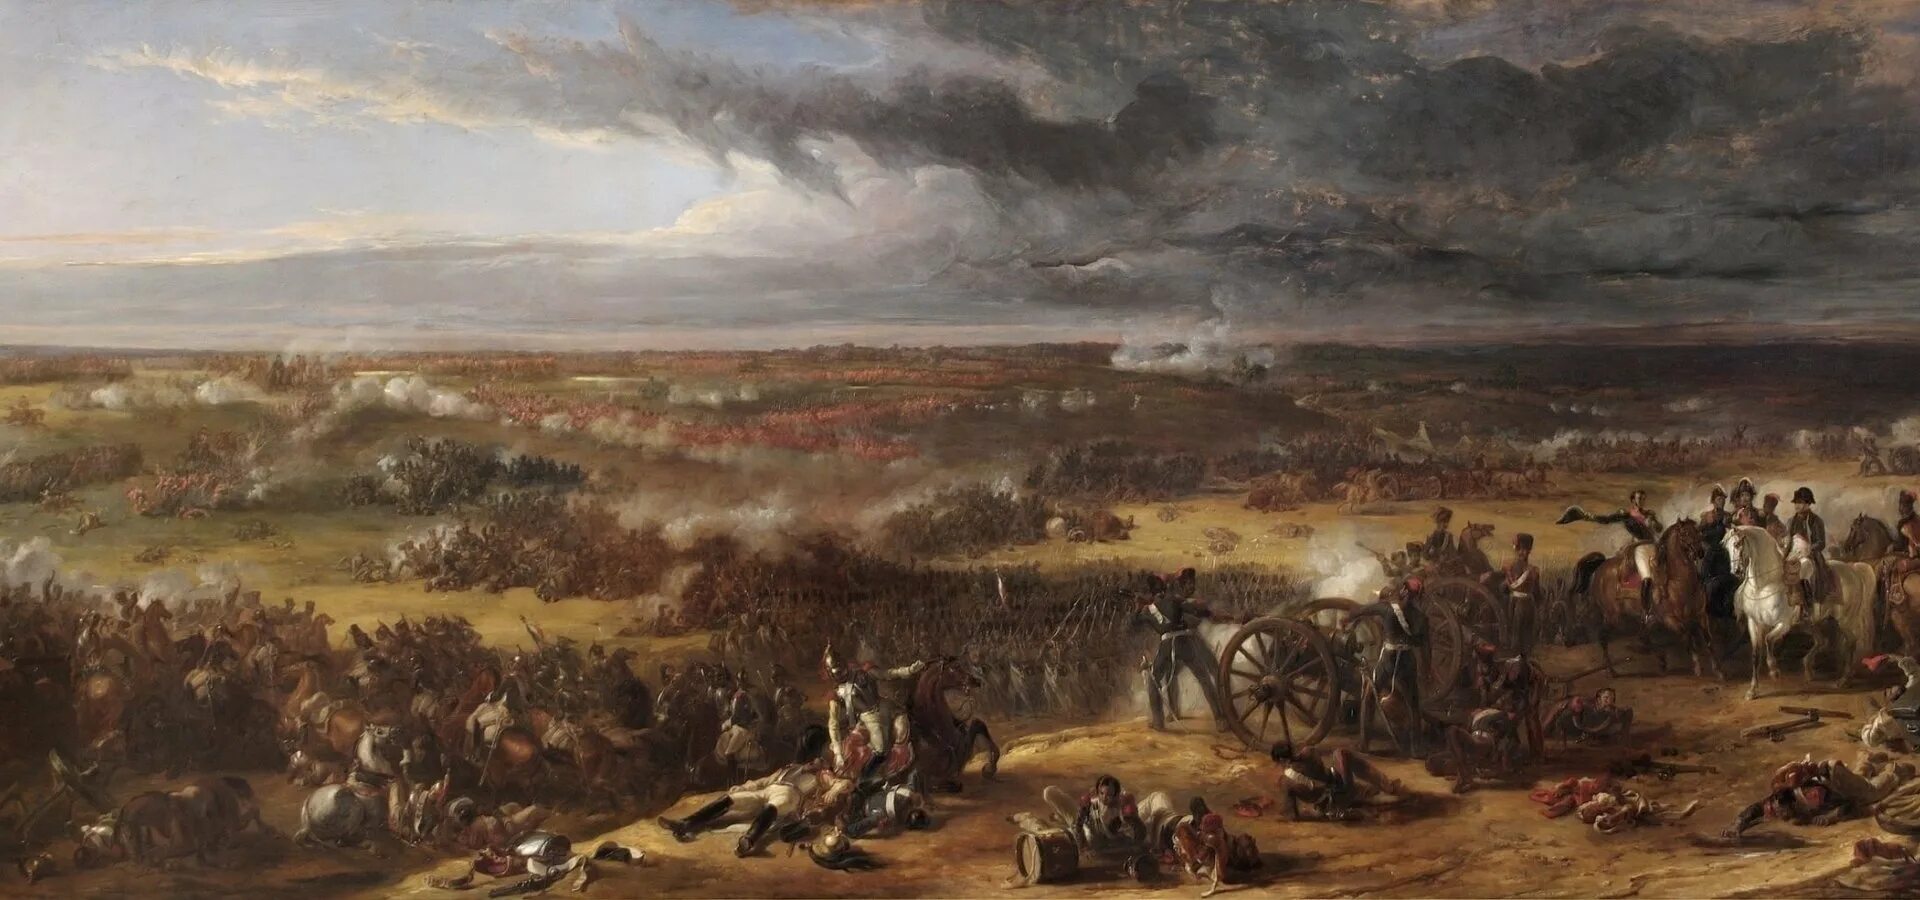 Наполеон битва Ватерлоо. Наполеон битва Ватерлоо художник. Наполеон Бонапарт 1815. Ватерлоо битва картины. Дуэты поля сражений